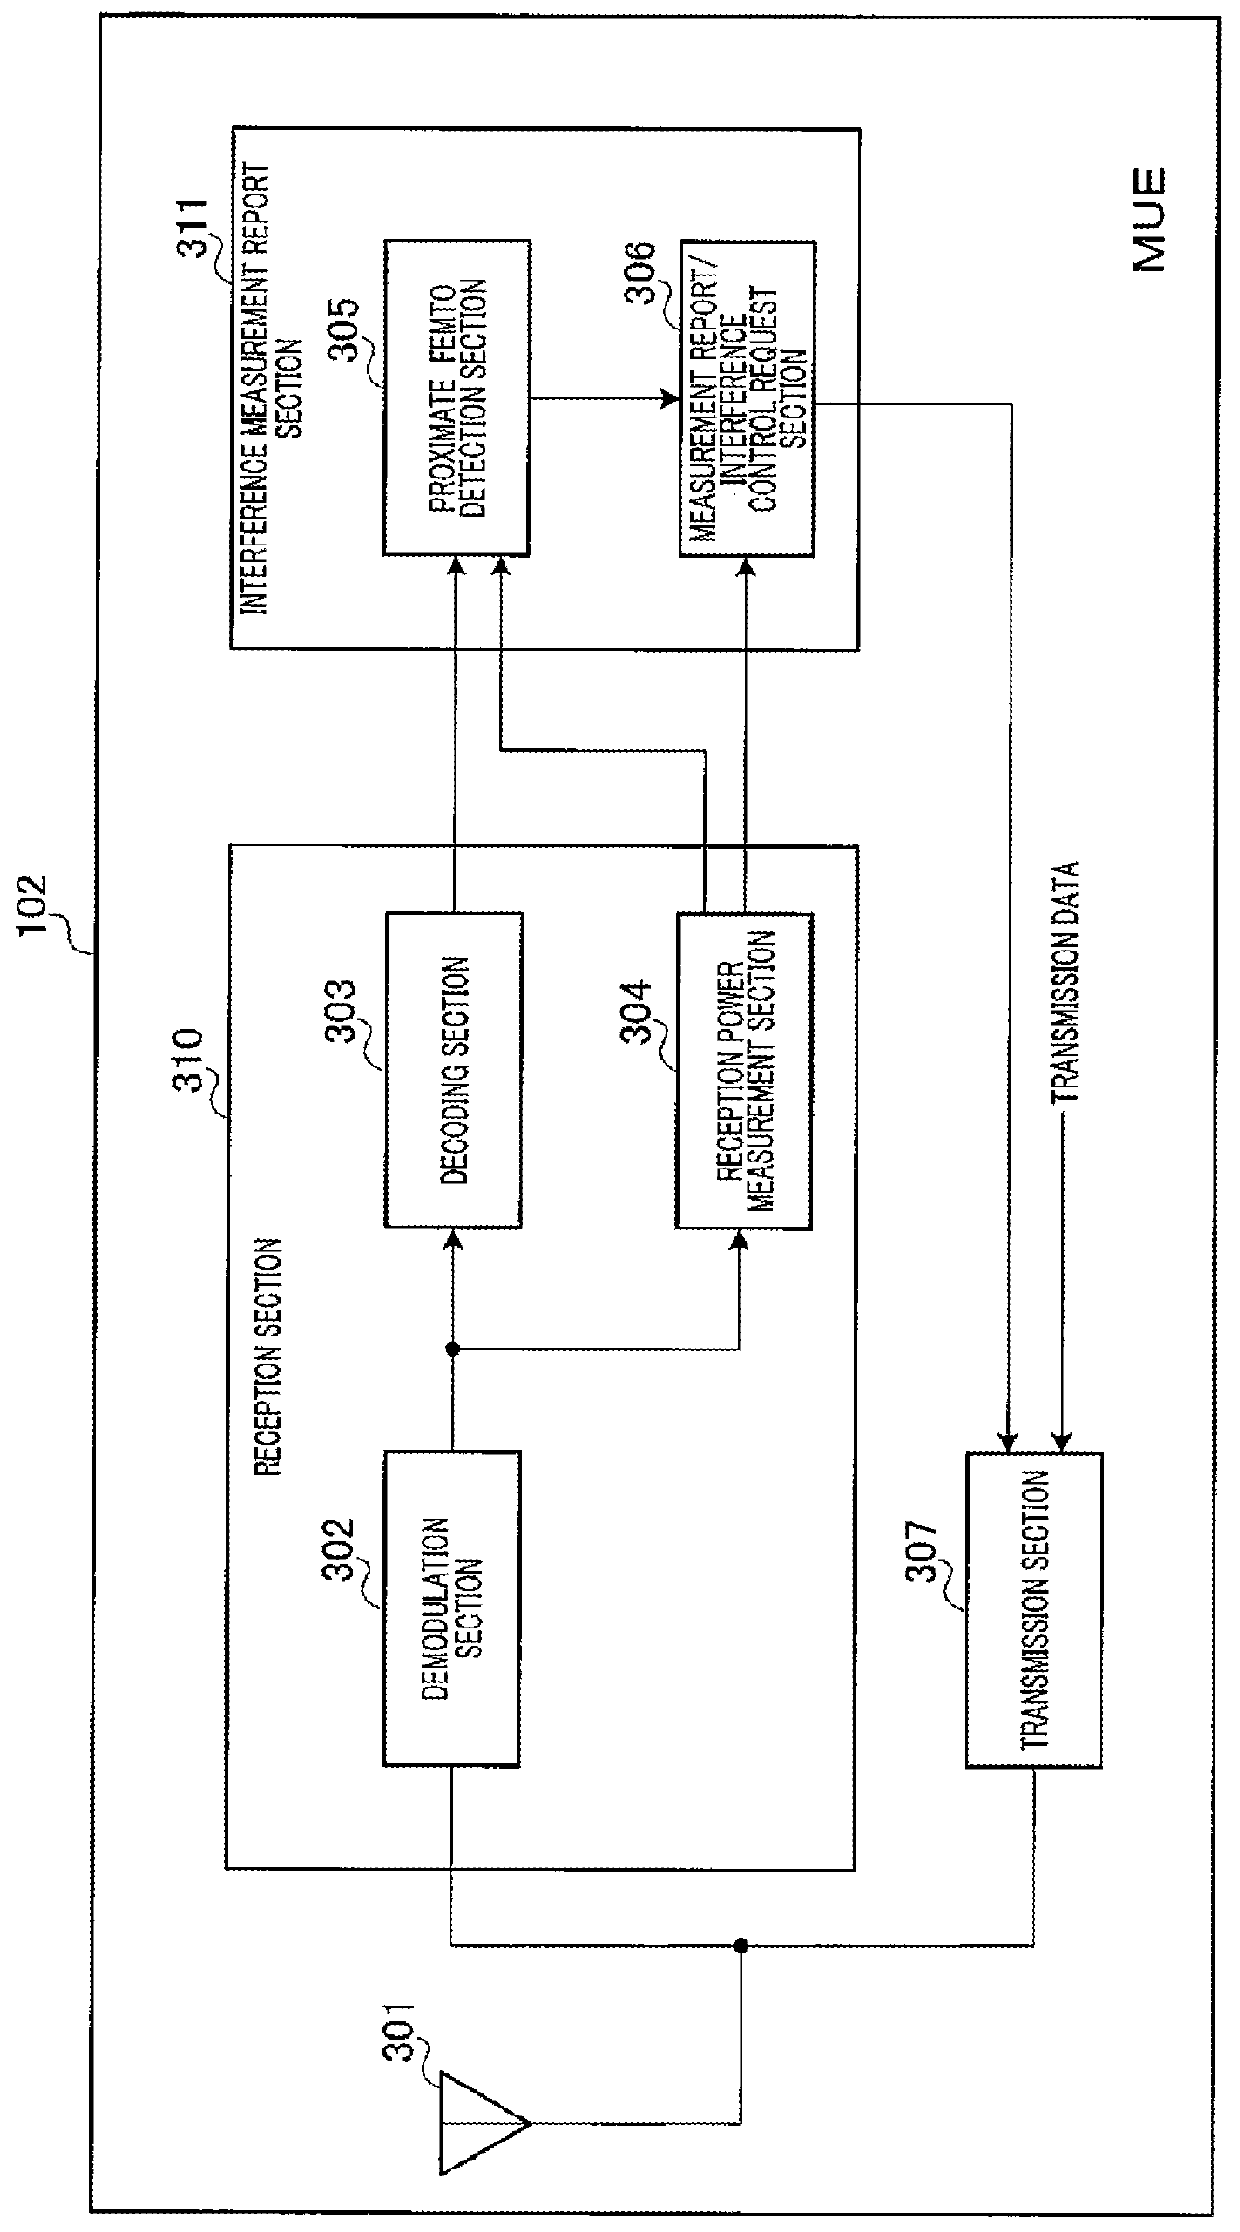 Interference control method, macro terminal, macro base station, and femtocell base station